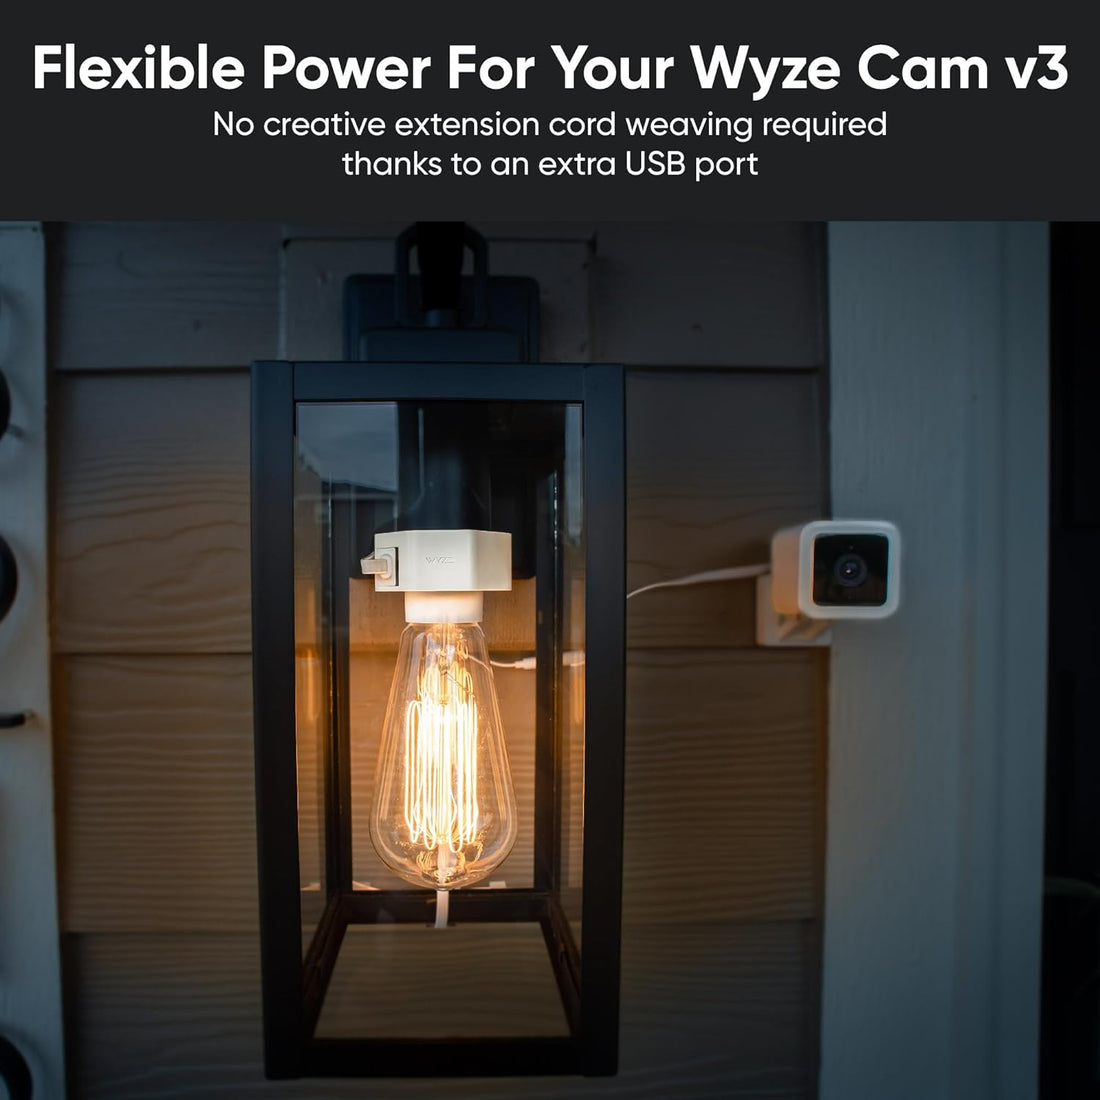 Wyze Lamp Socket Power Adapter for Wyze Cam v3 (v3 Camera Sold Separately)